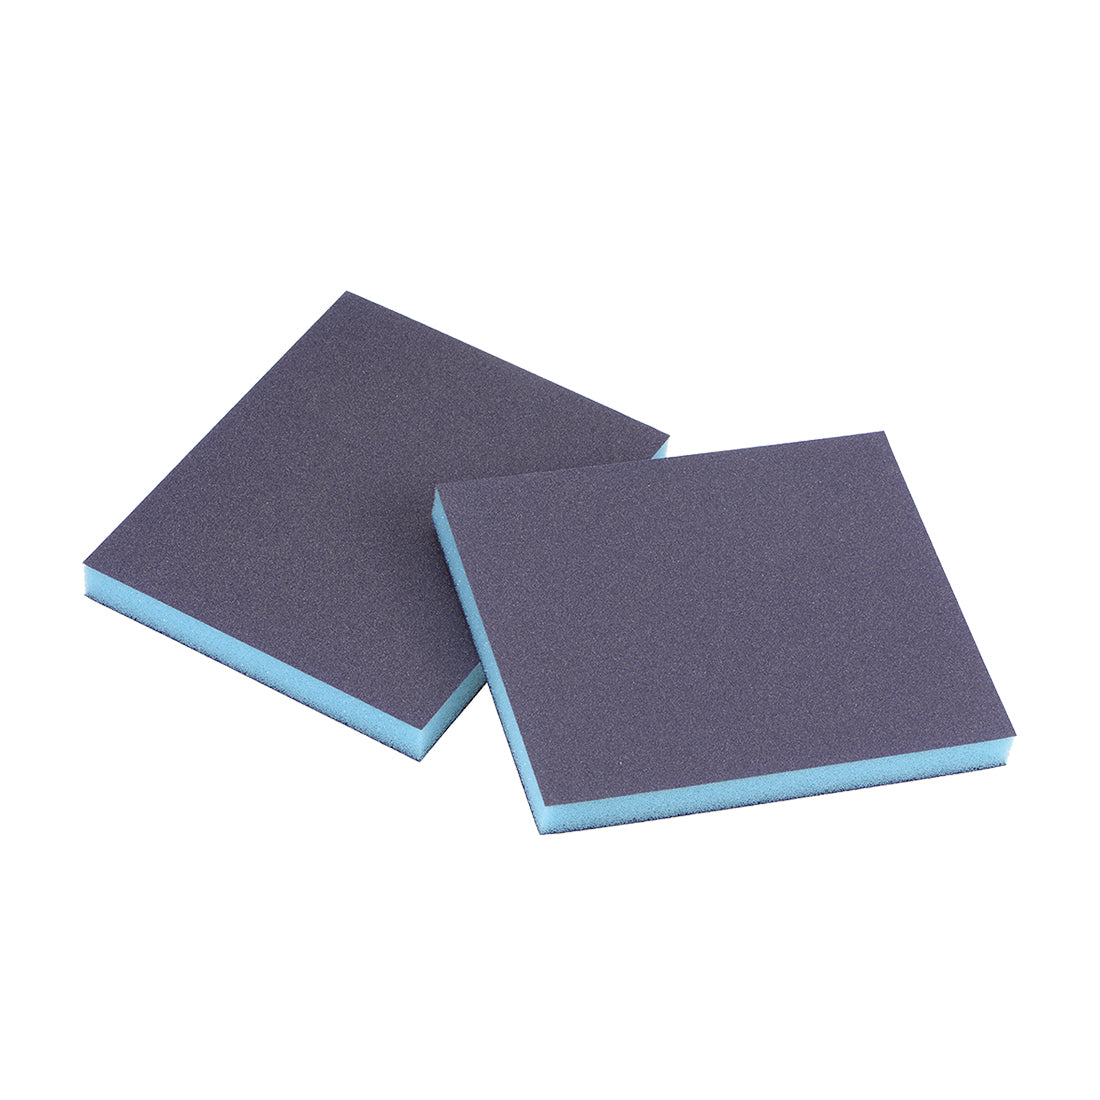 uxcell Uxcell Sanding Sponge 220 Grit Sanding Block Pad 4.7inch x 3.9inch x 0.4inch Blue 2pcs